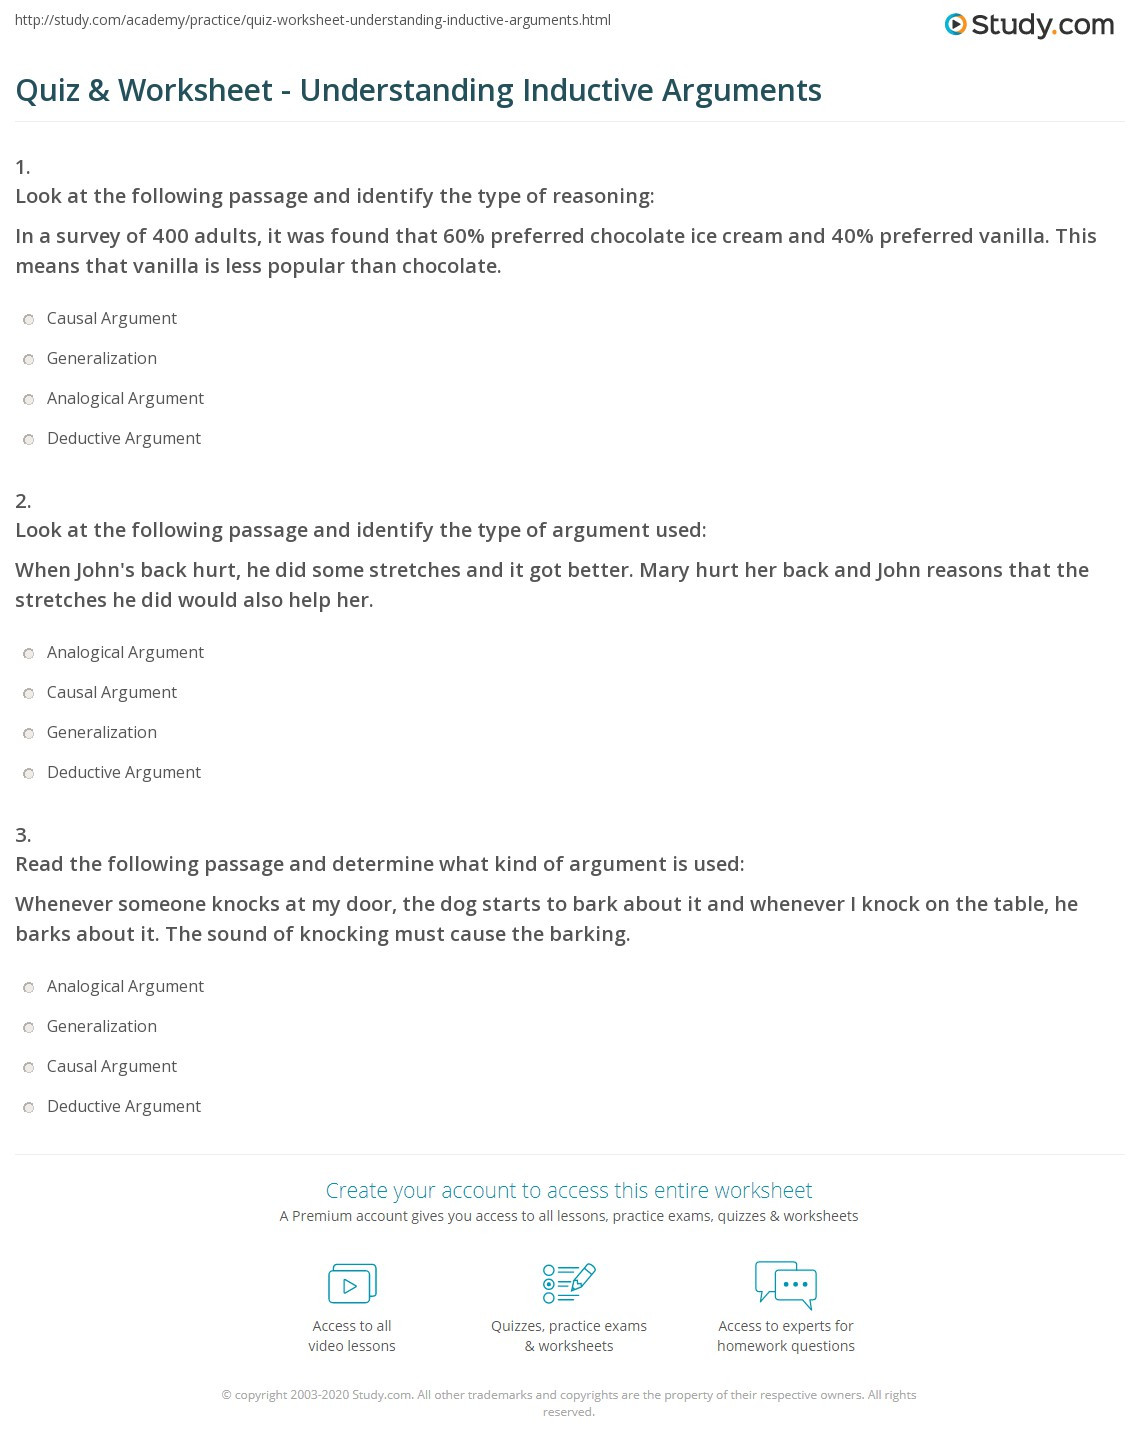 Inductive and Deductive Reasoning Worksheet Quiz &amp; Worksheet Understanding Inductive Arguments